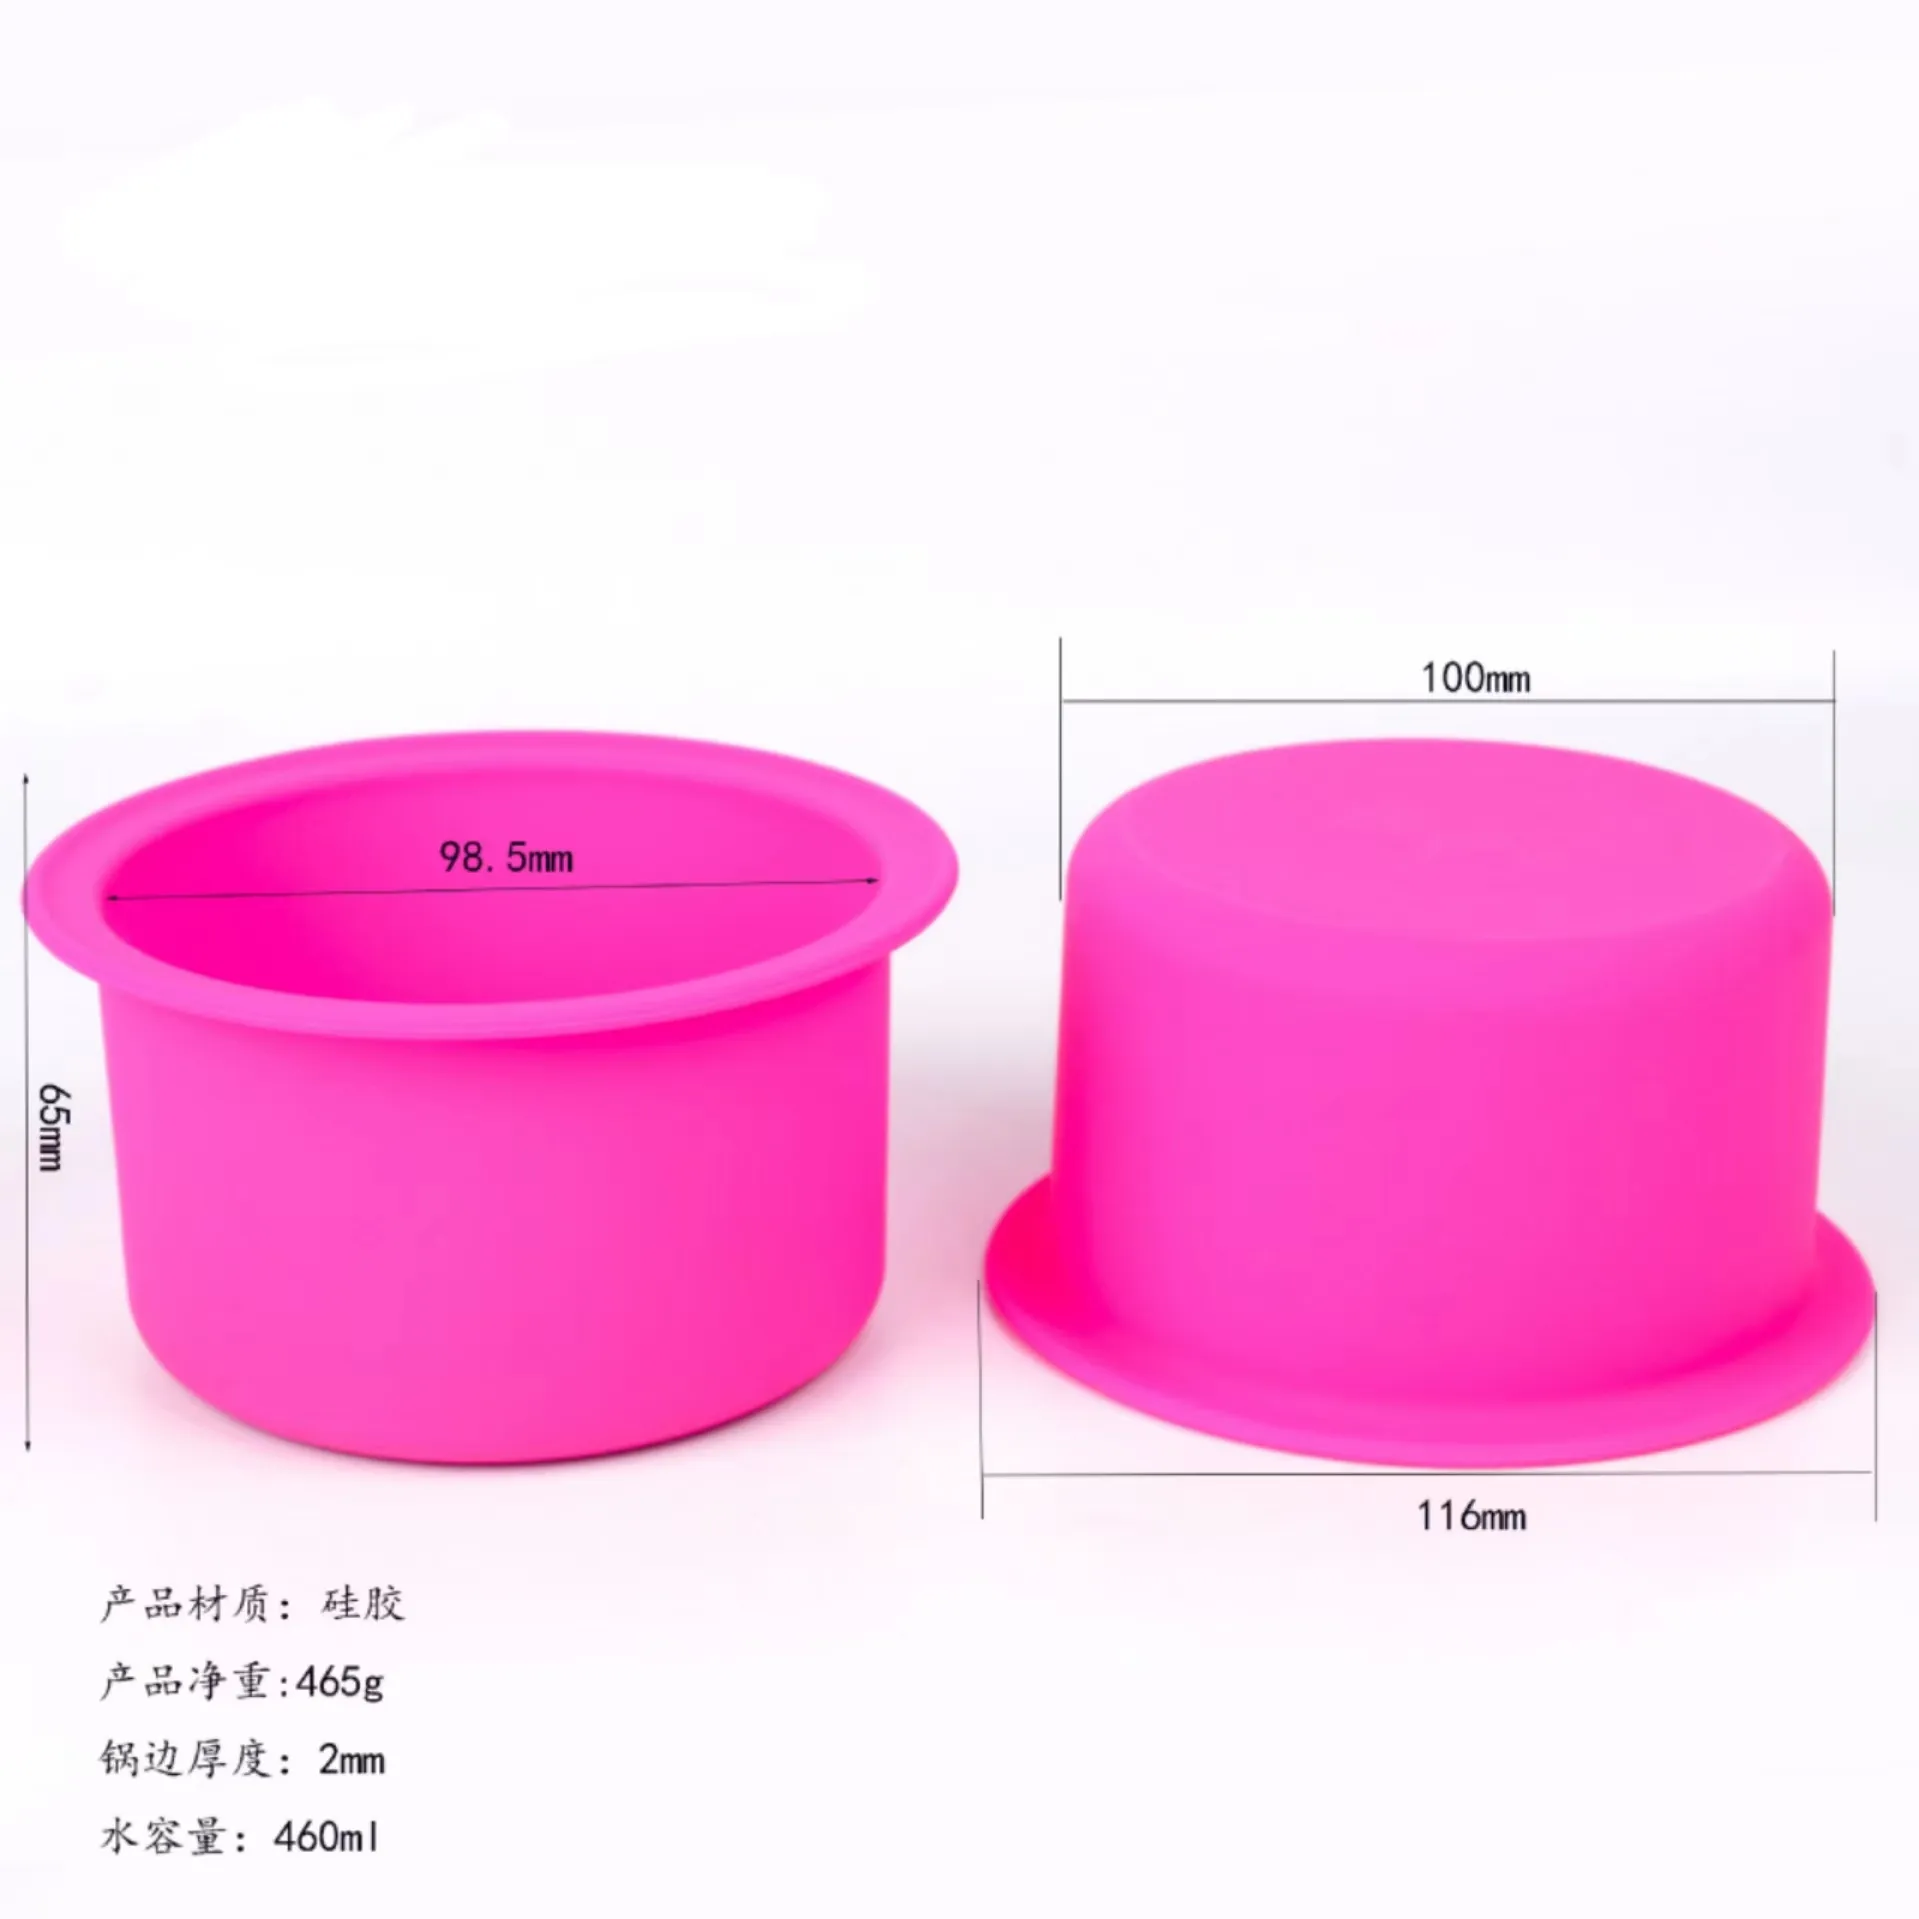 Wally Beauty Wax Bean Silica Gel bowl Reusable silicone wax pot for wax heater